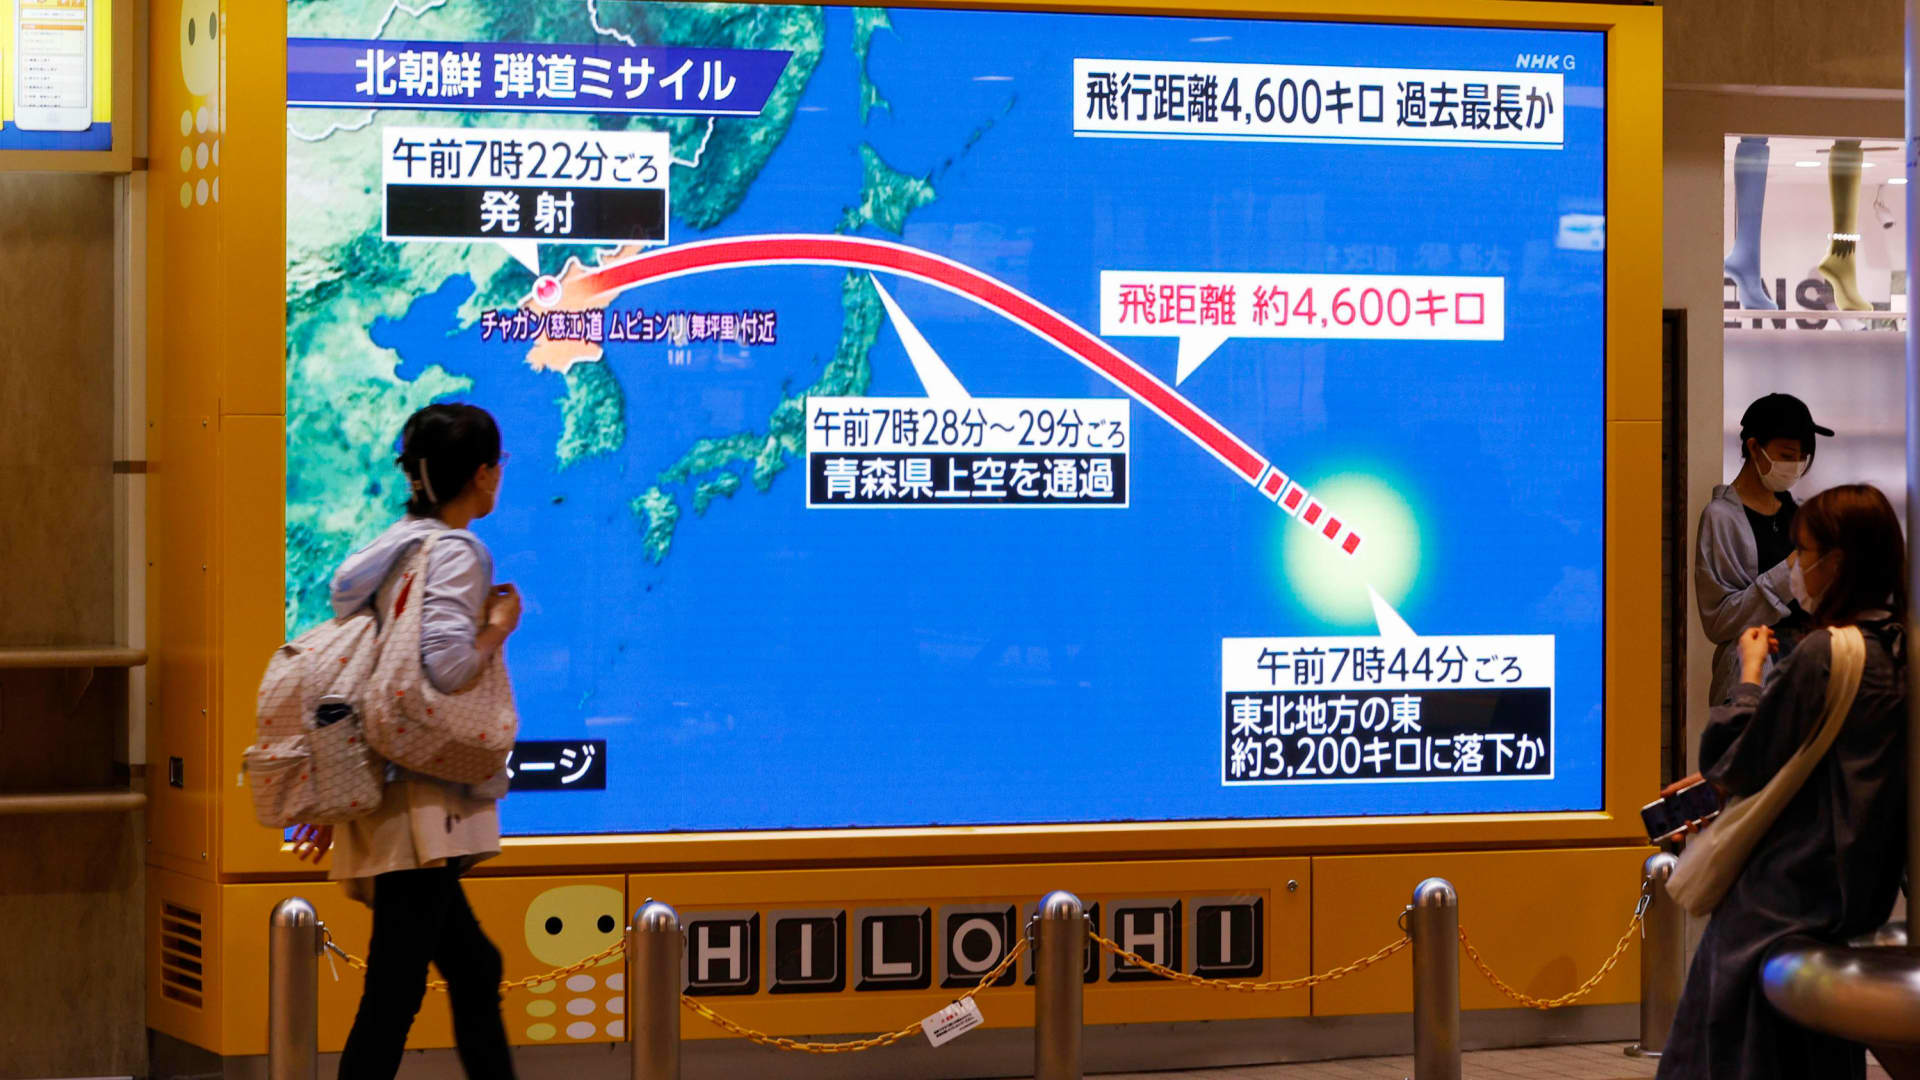 north-korean-missile-launch-raises-alarm-in-washington